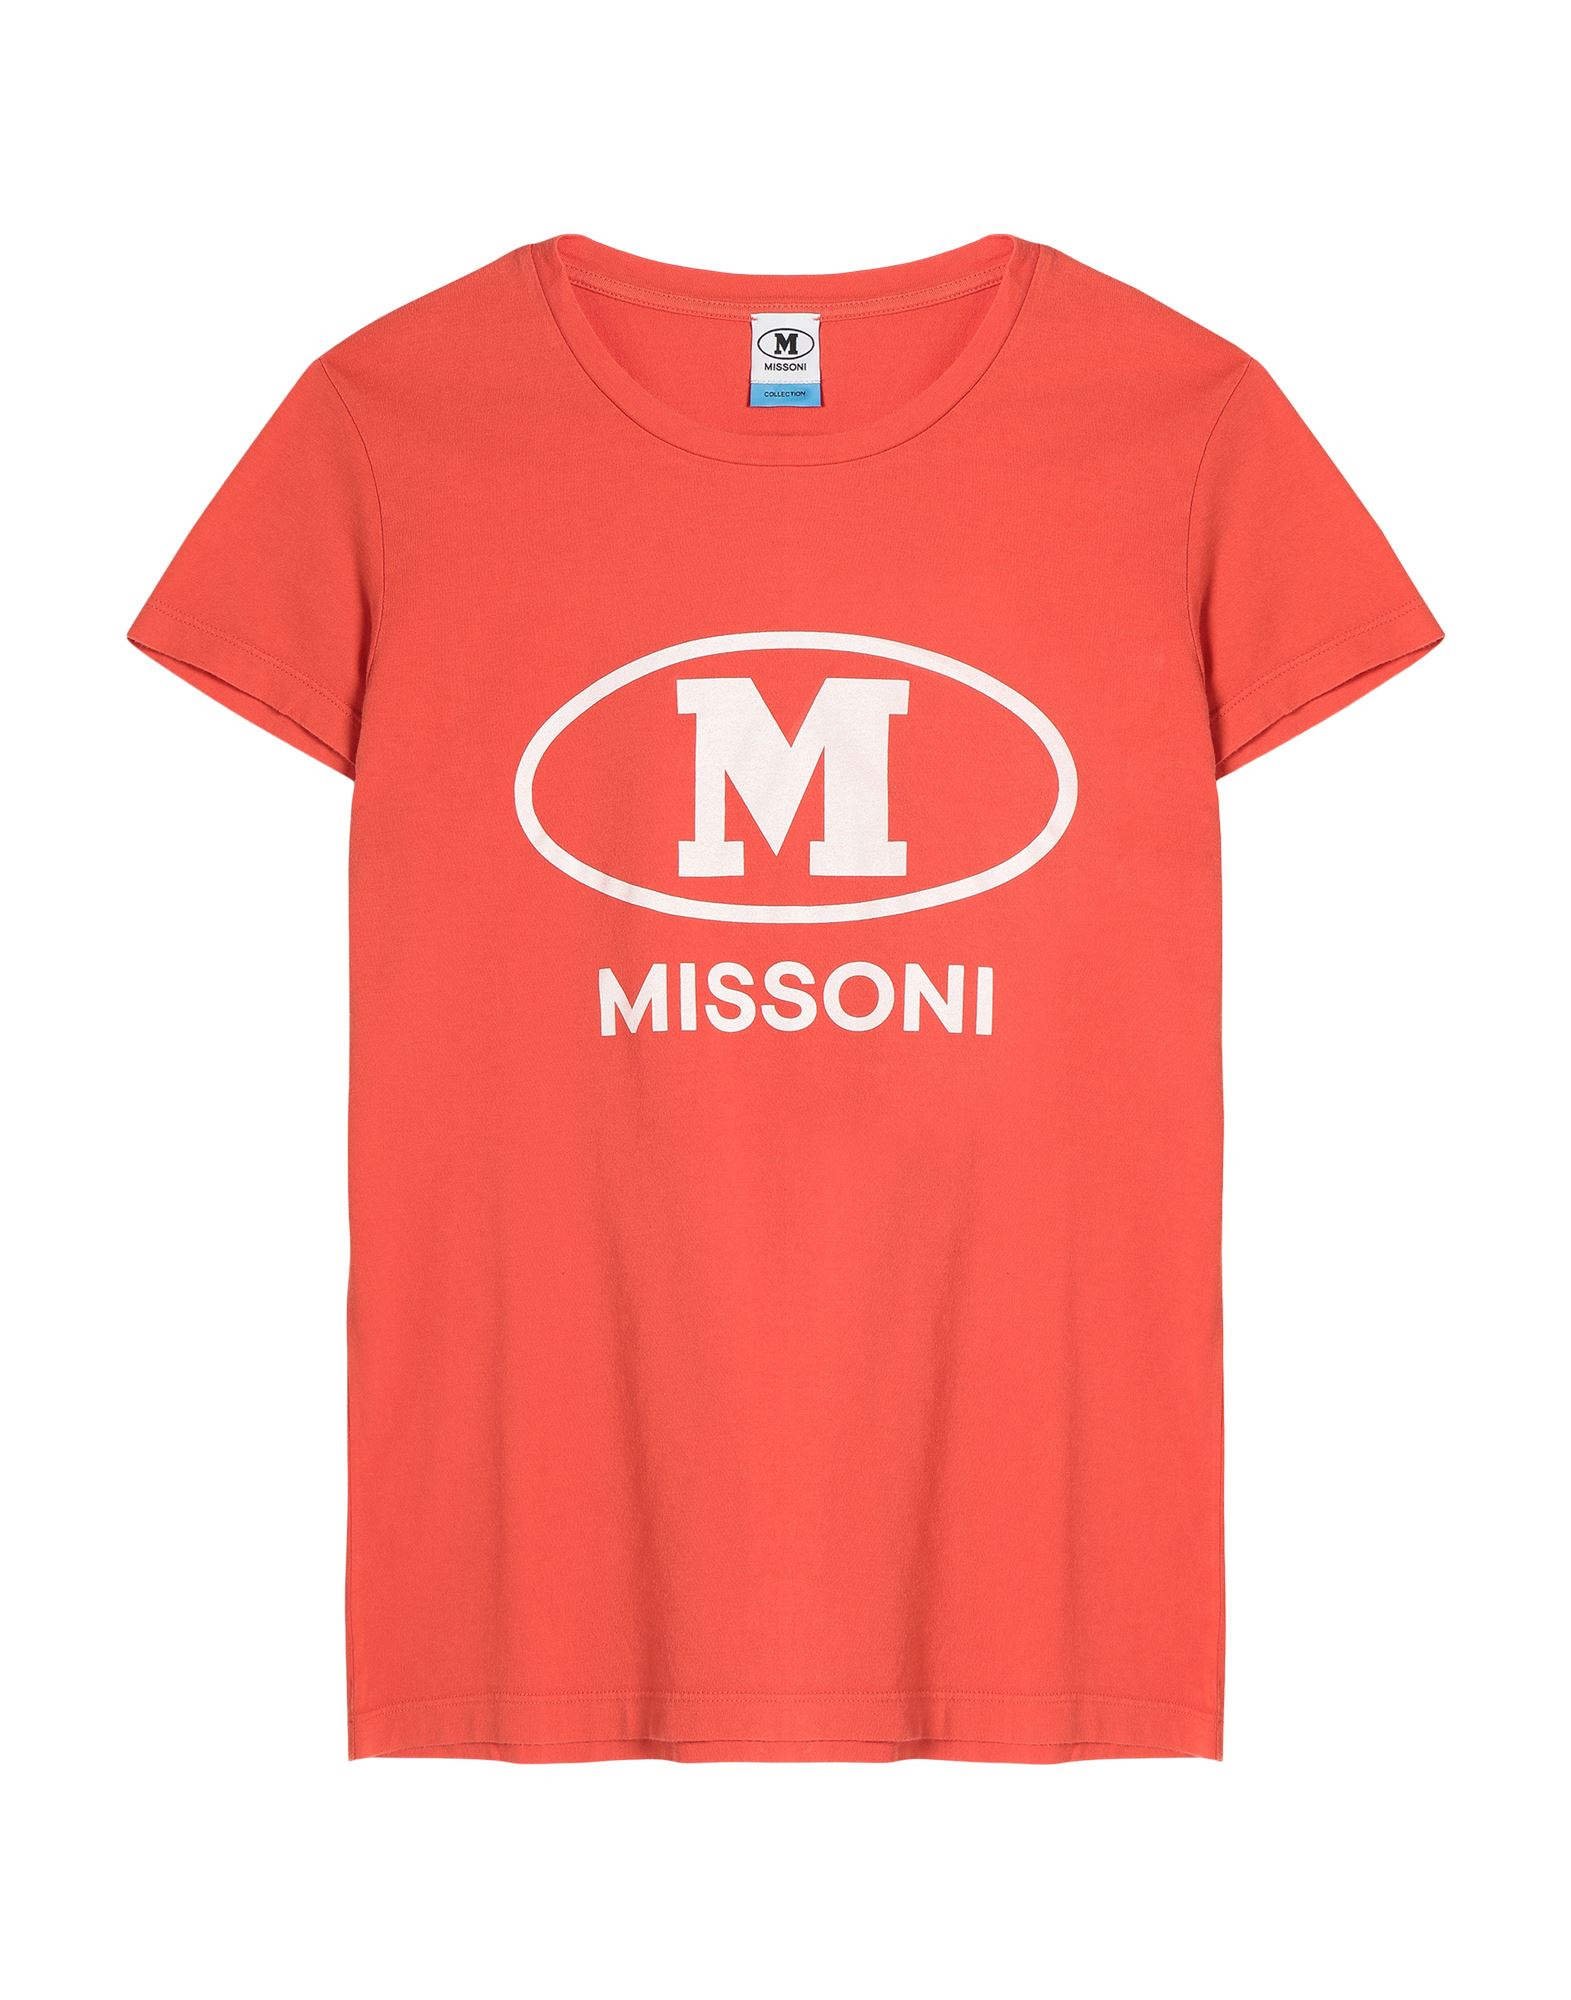 M Missoni T-shirts In Orange | ModeSens